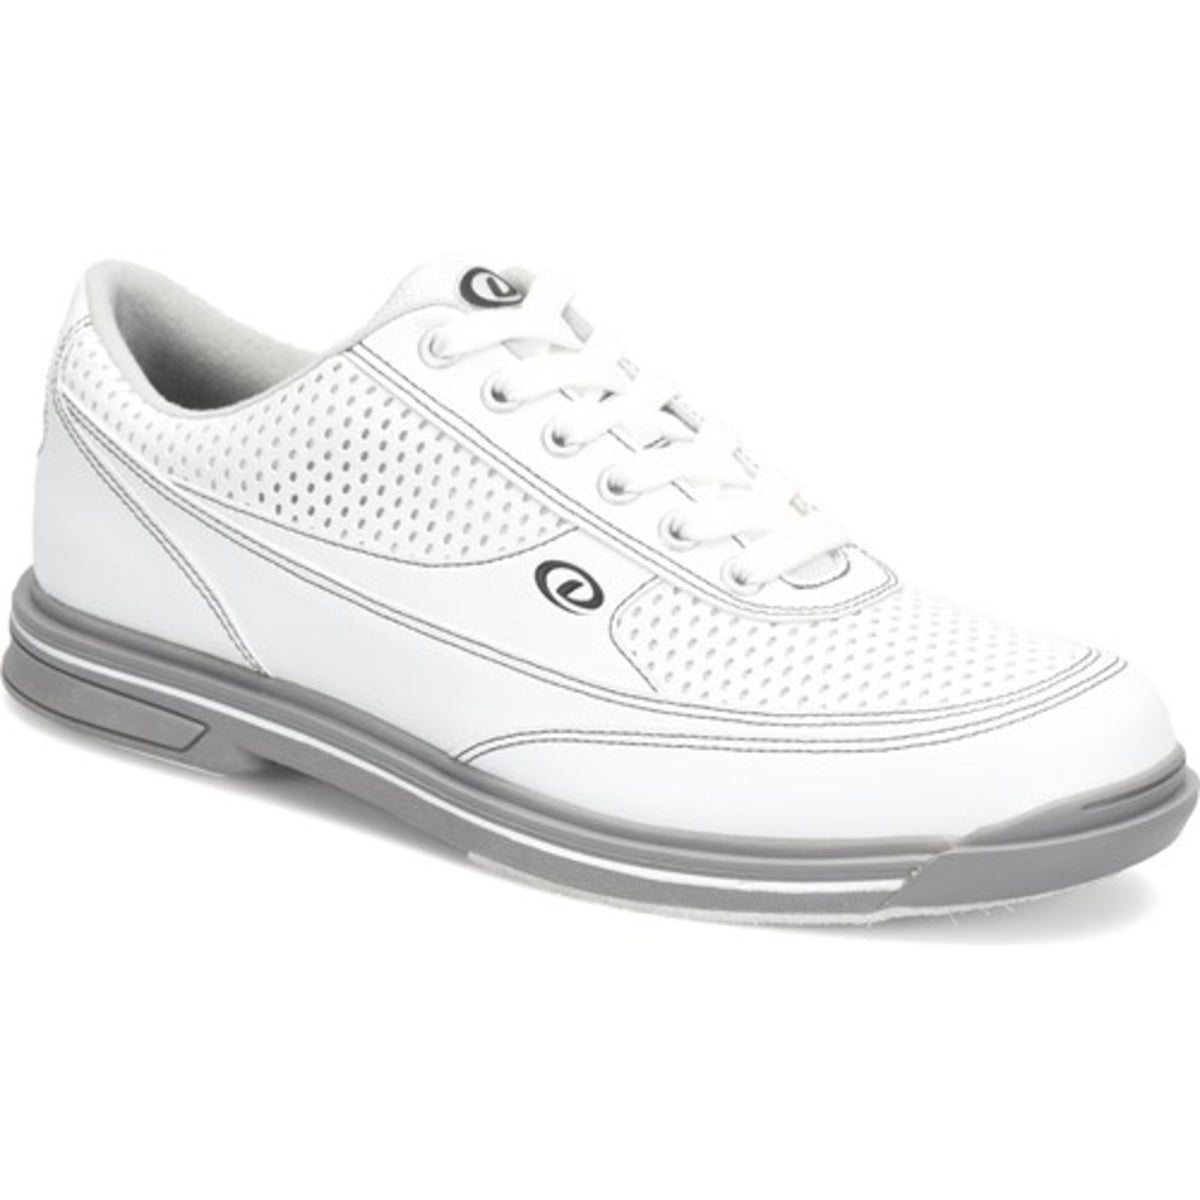 Turbo Pro White/Grey Shoes